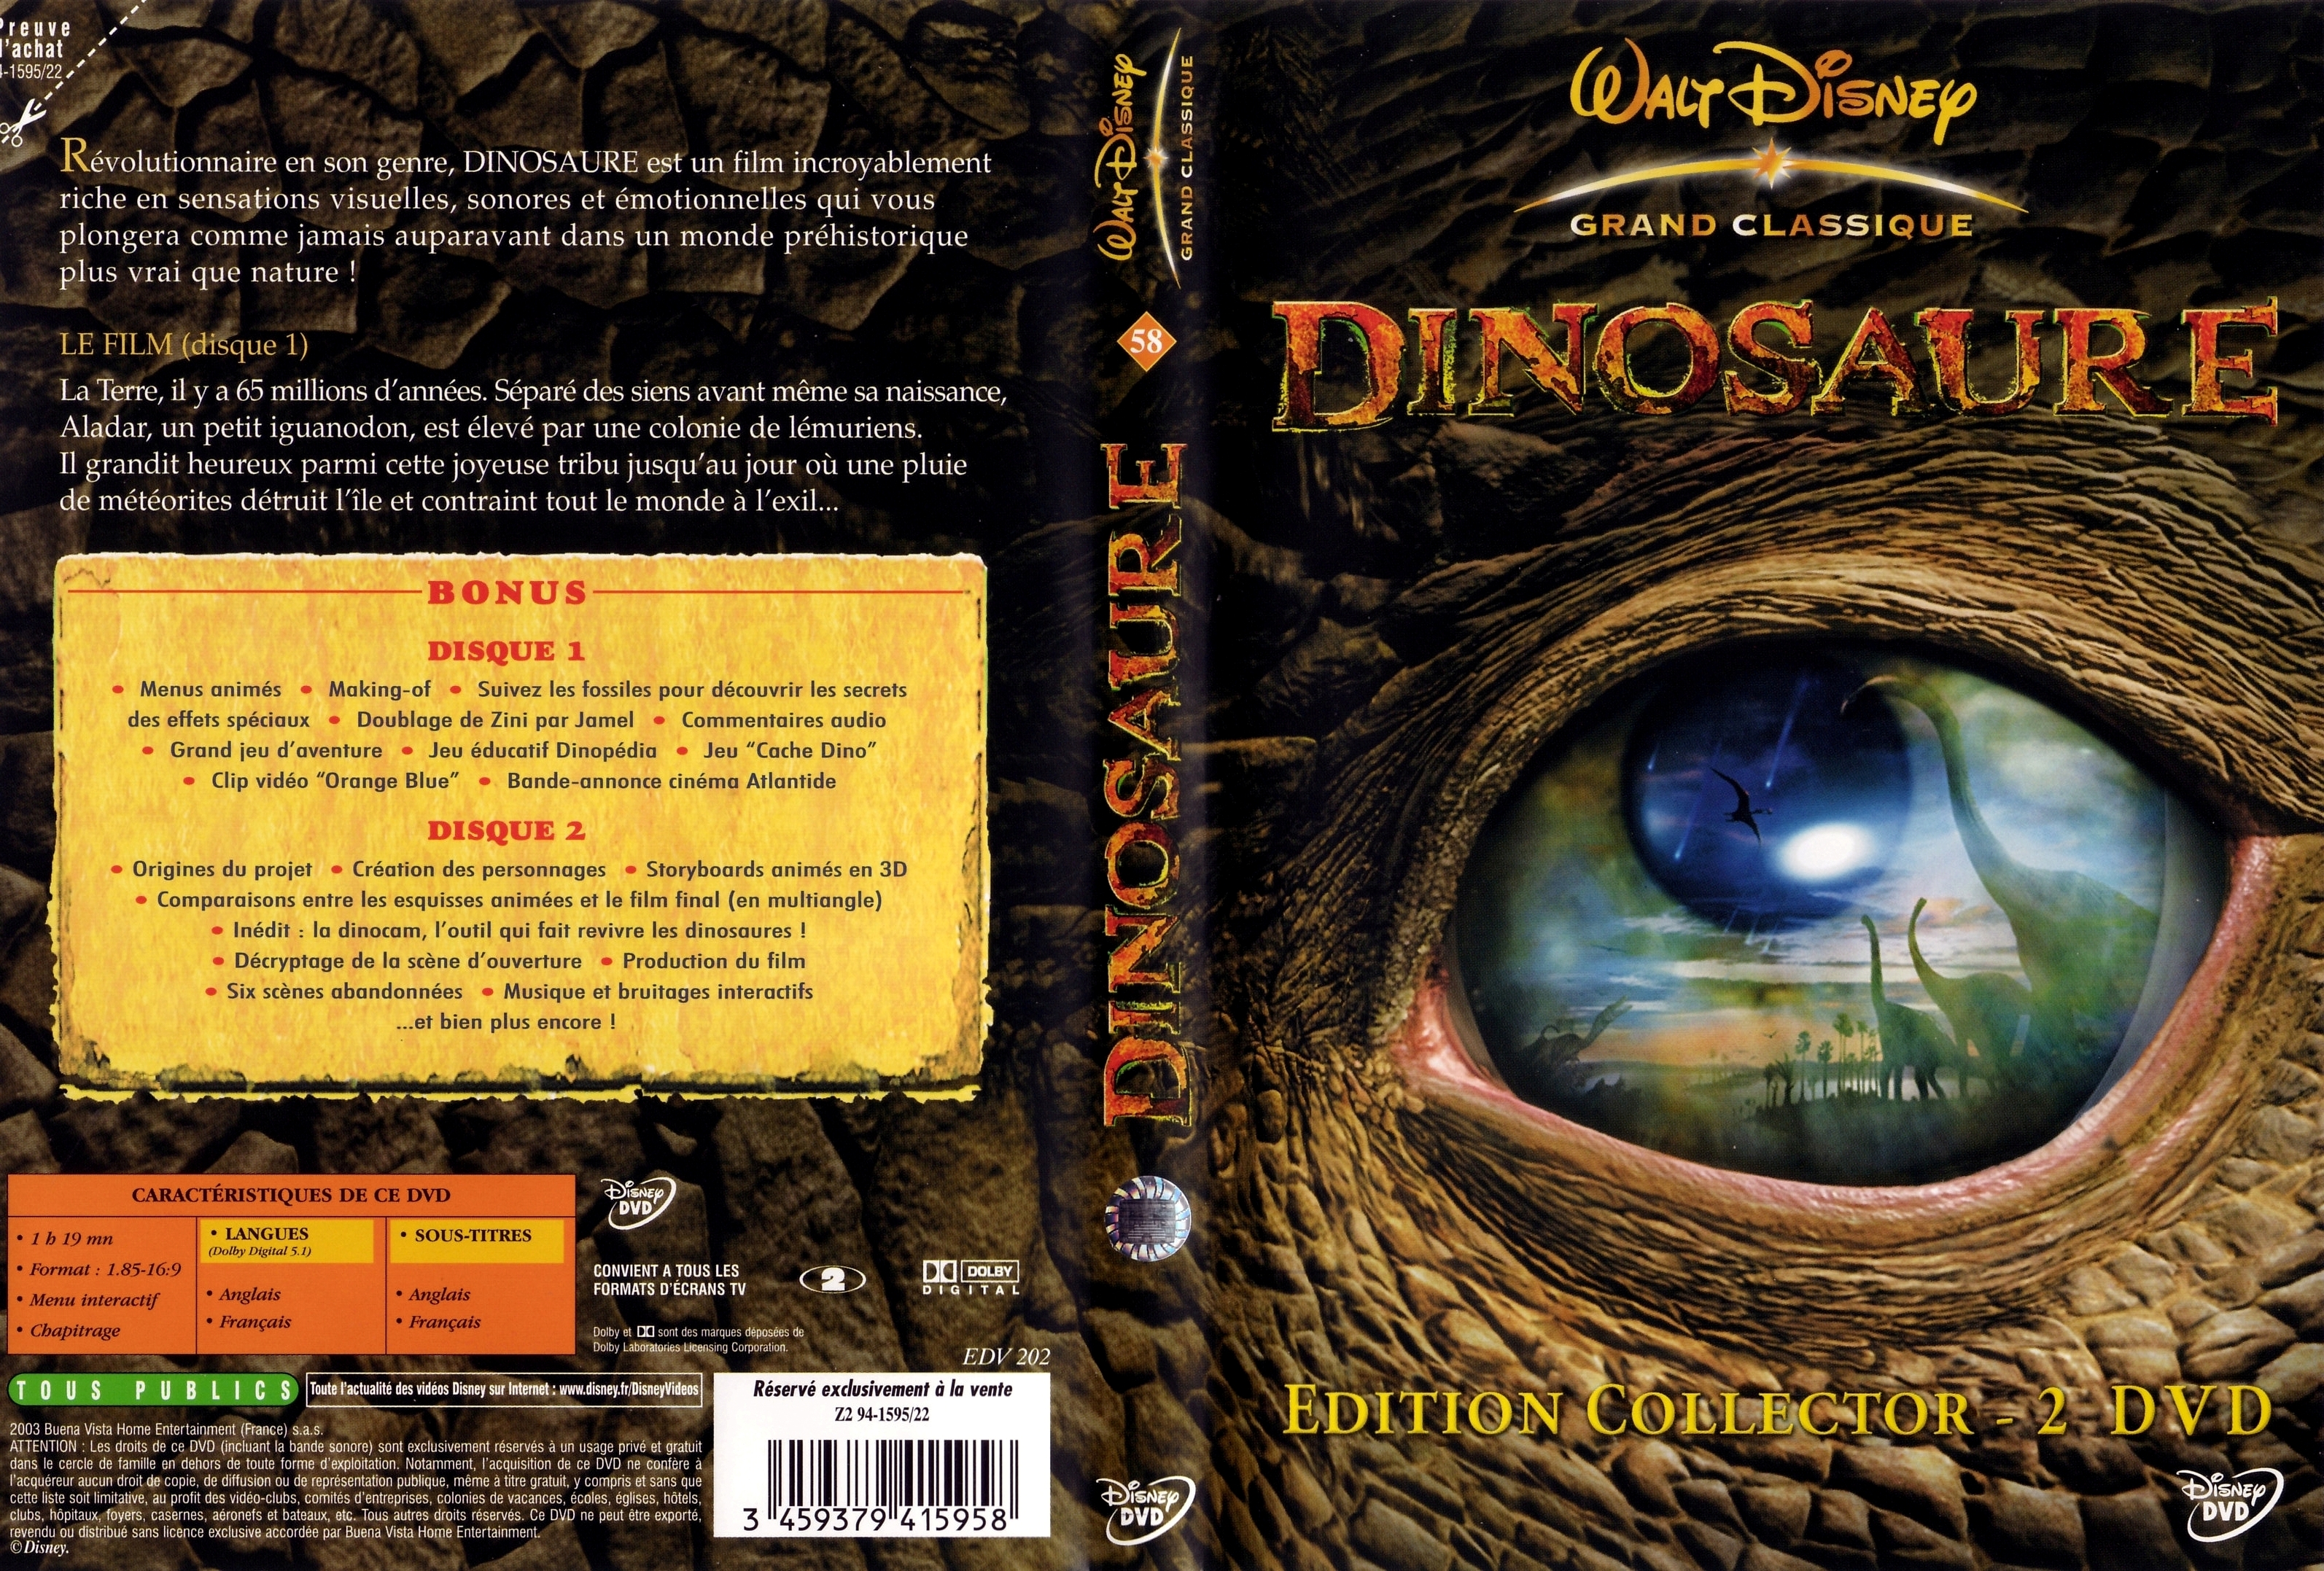 Jaquette DVD Dinosaure v3